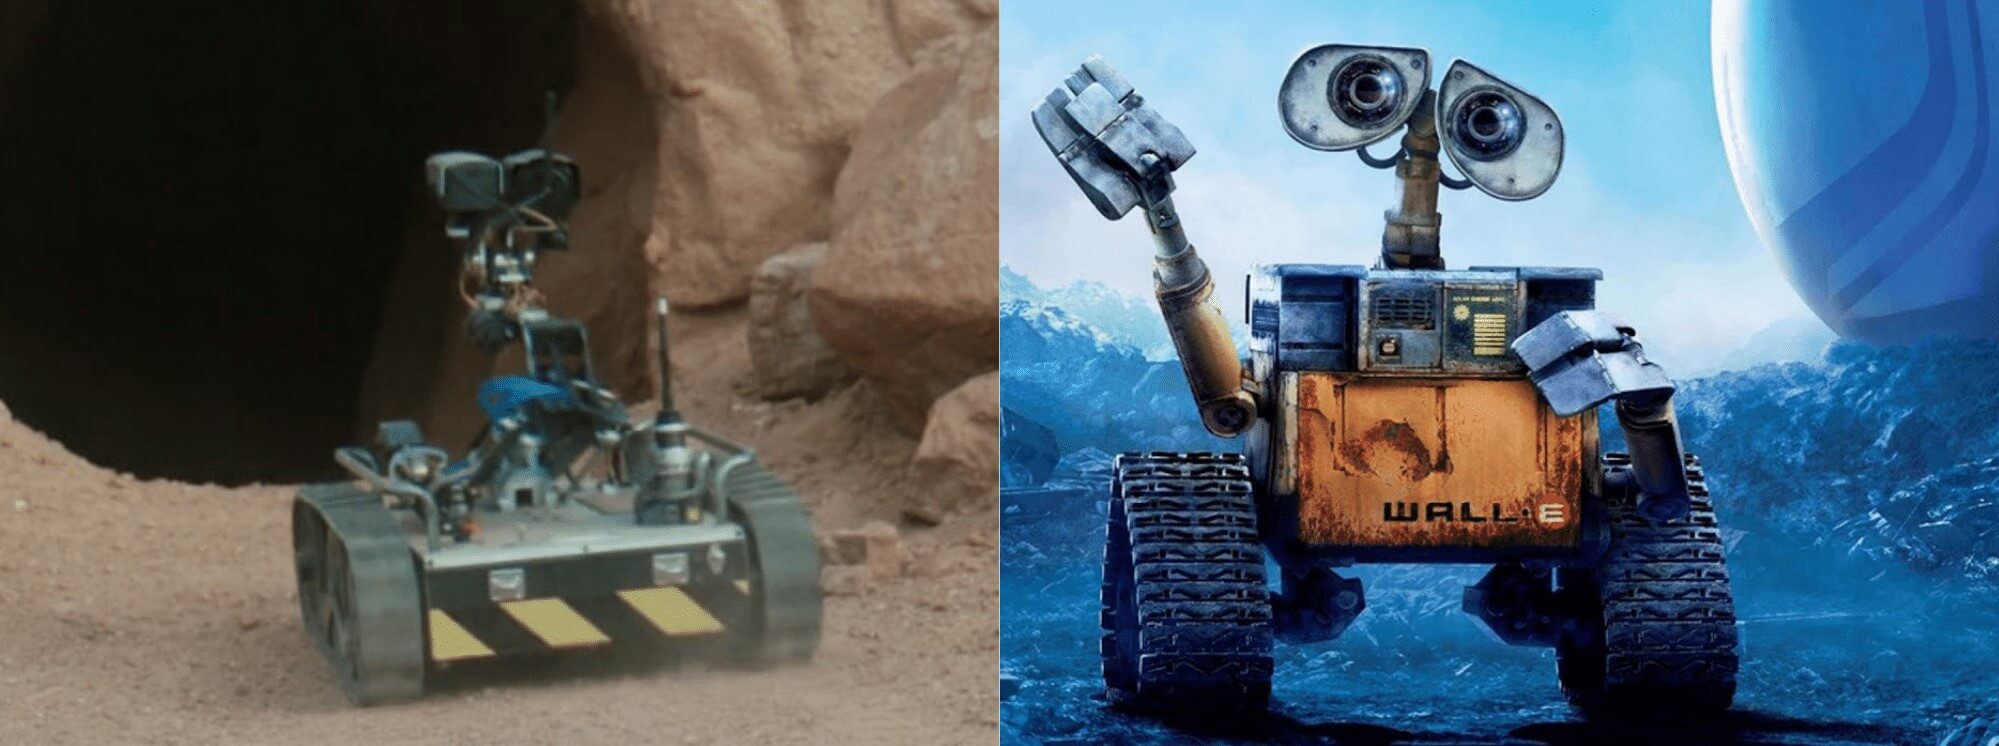 rover design is similar to wall e